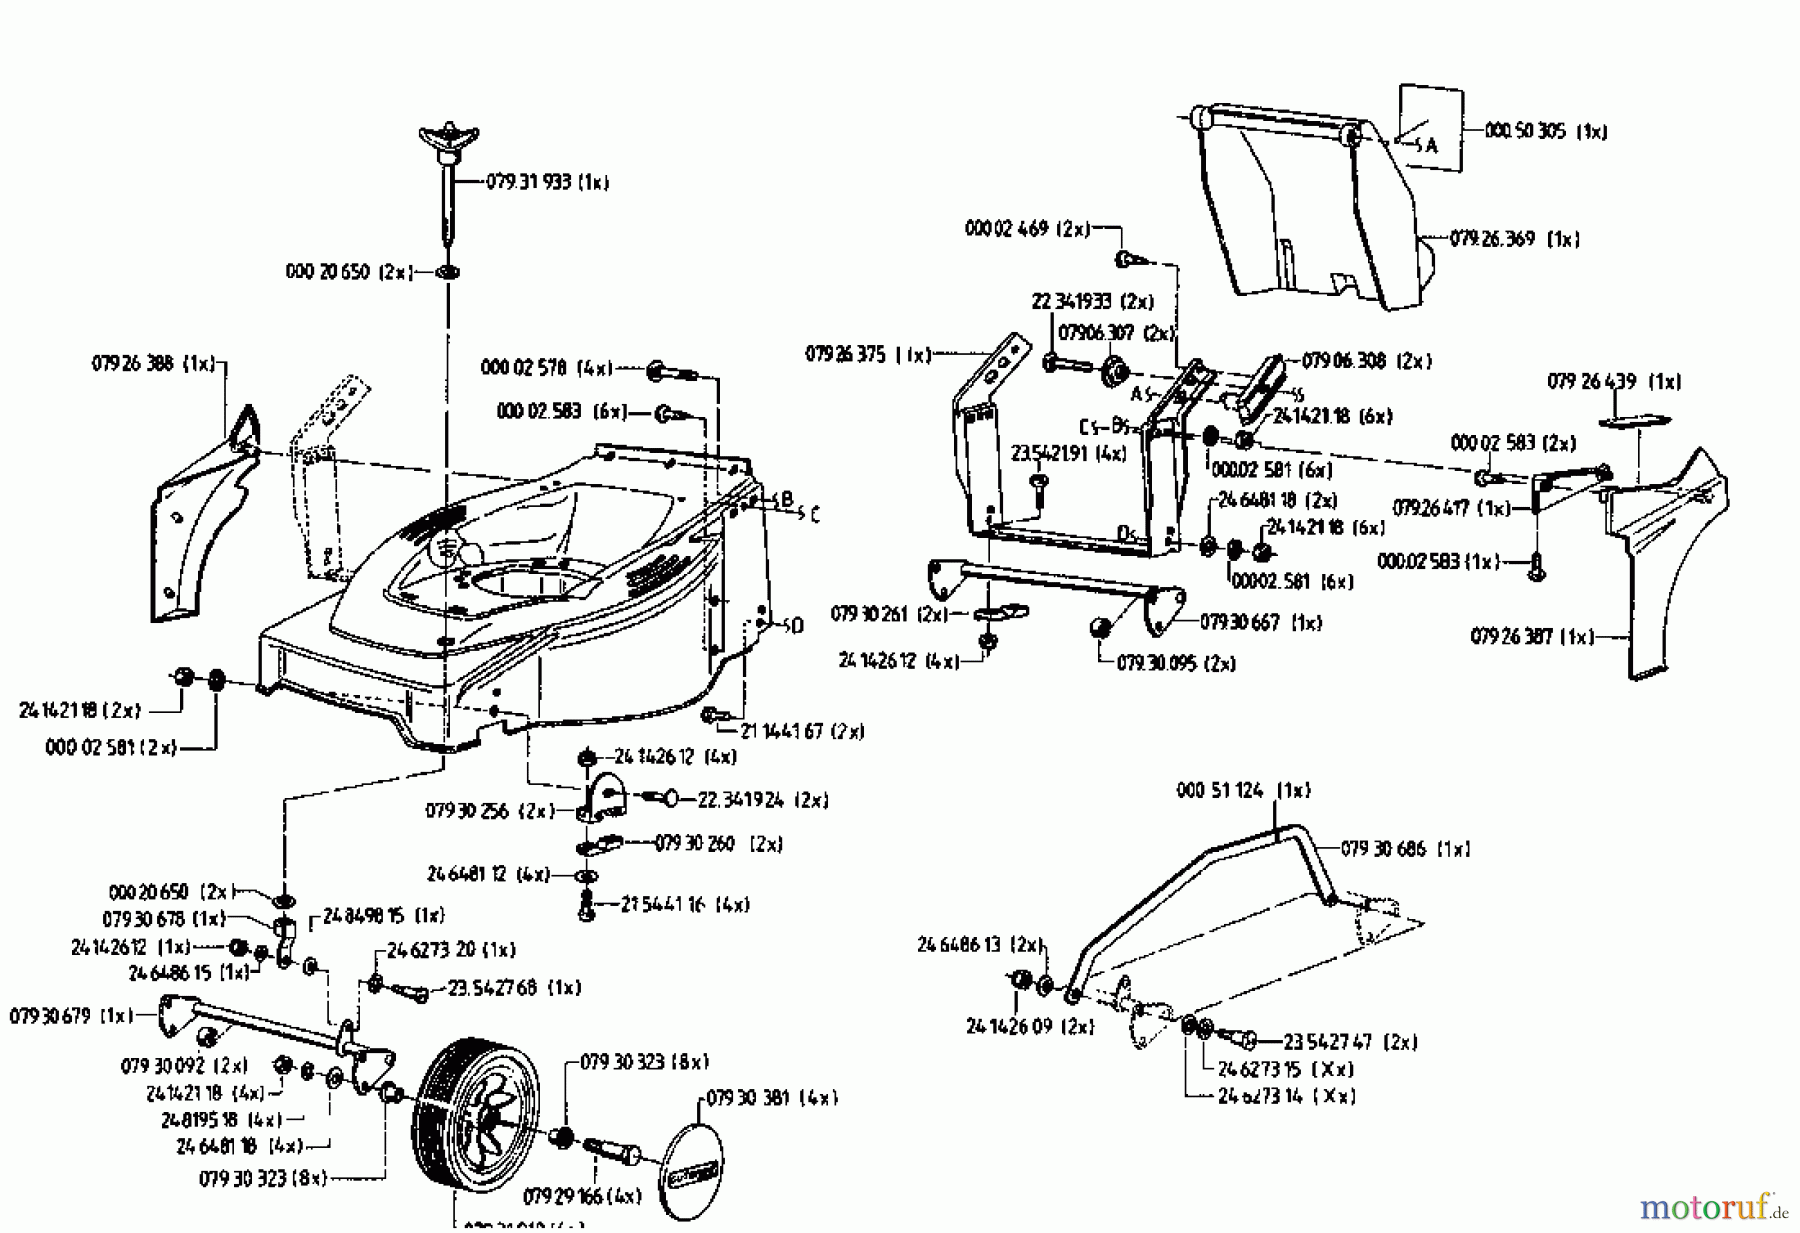  Gutbrod Electric mower HE 48 L 02817.05  (1996) Basic machine